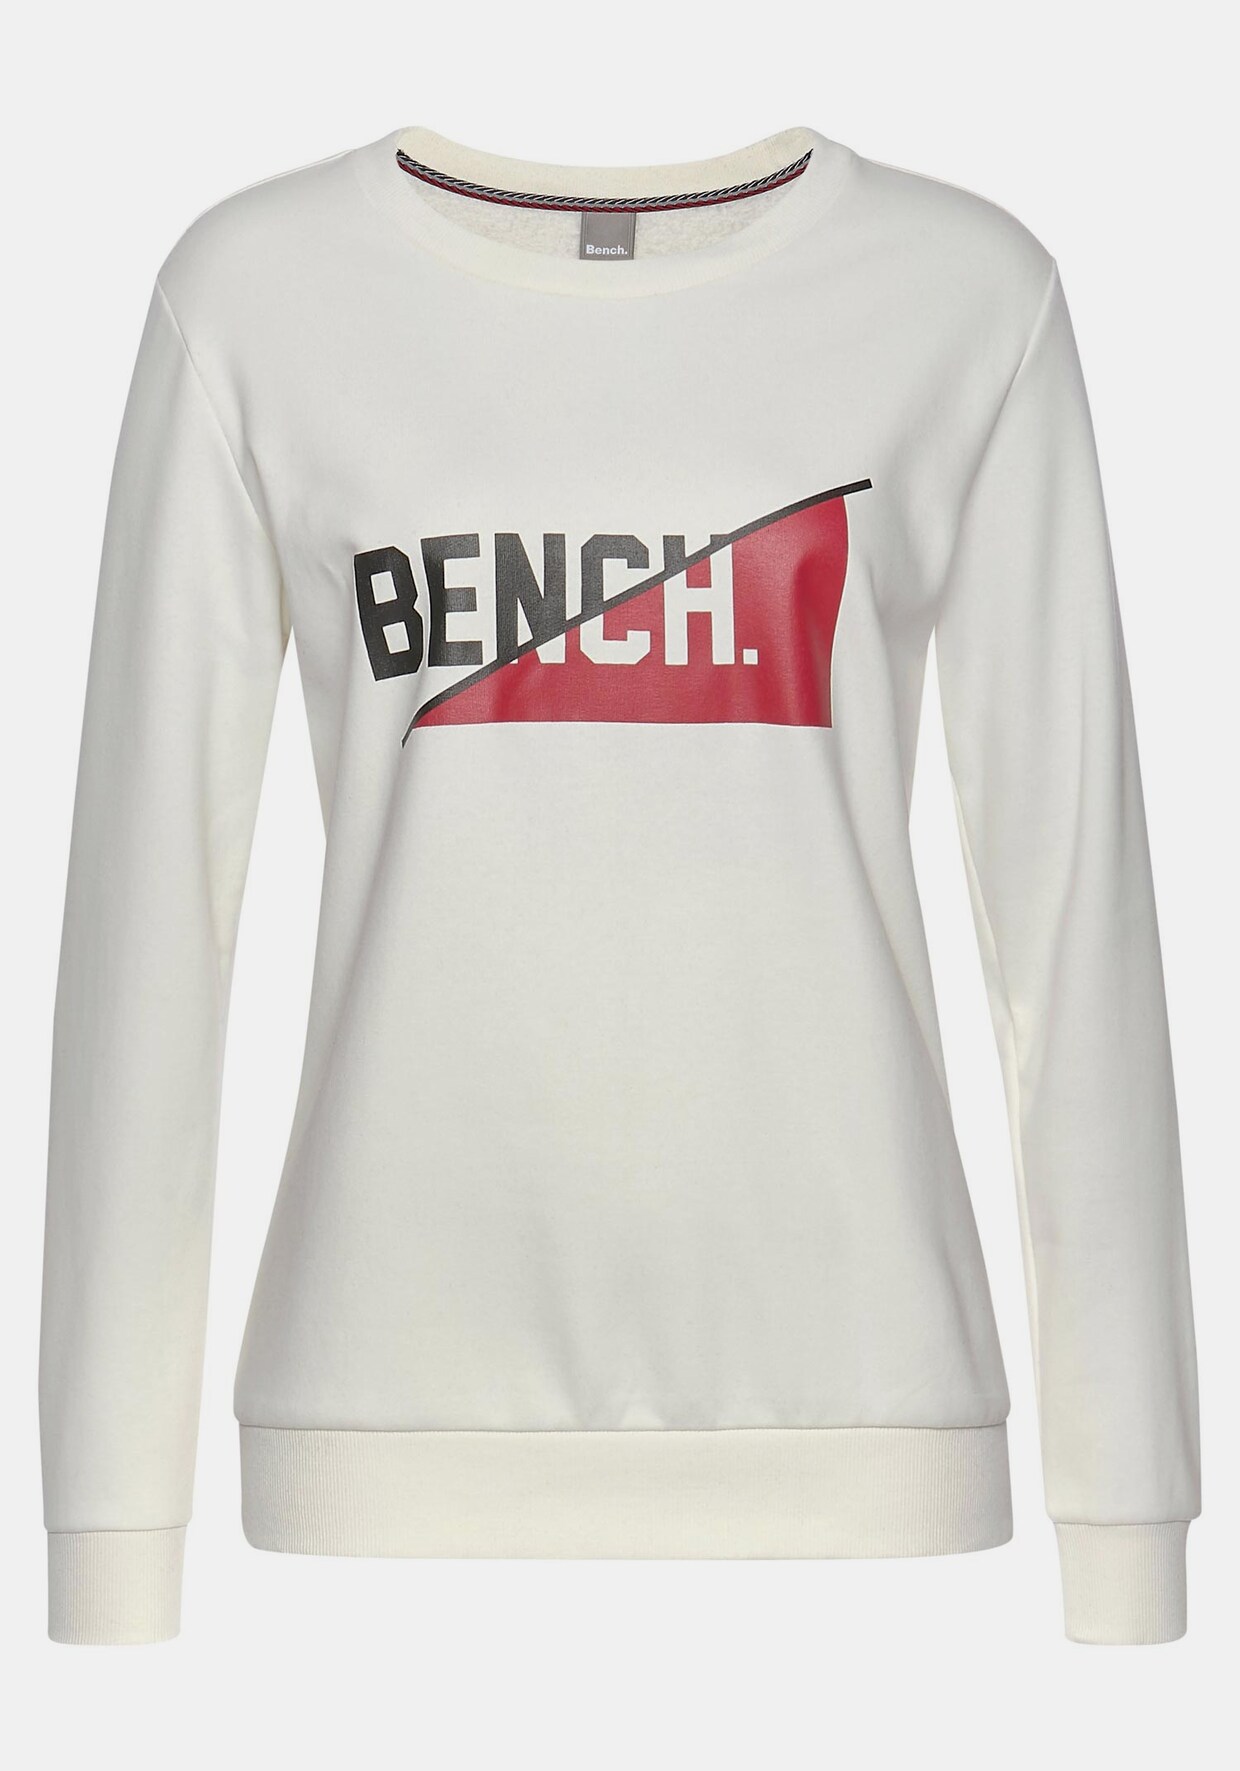 Bench. Sweatshirt - offwhite-ecru